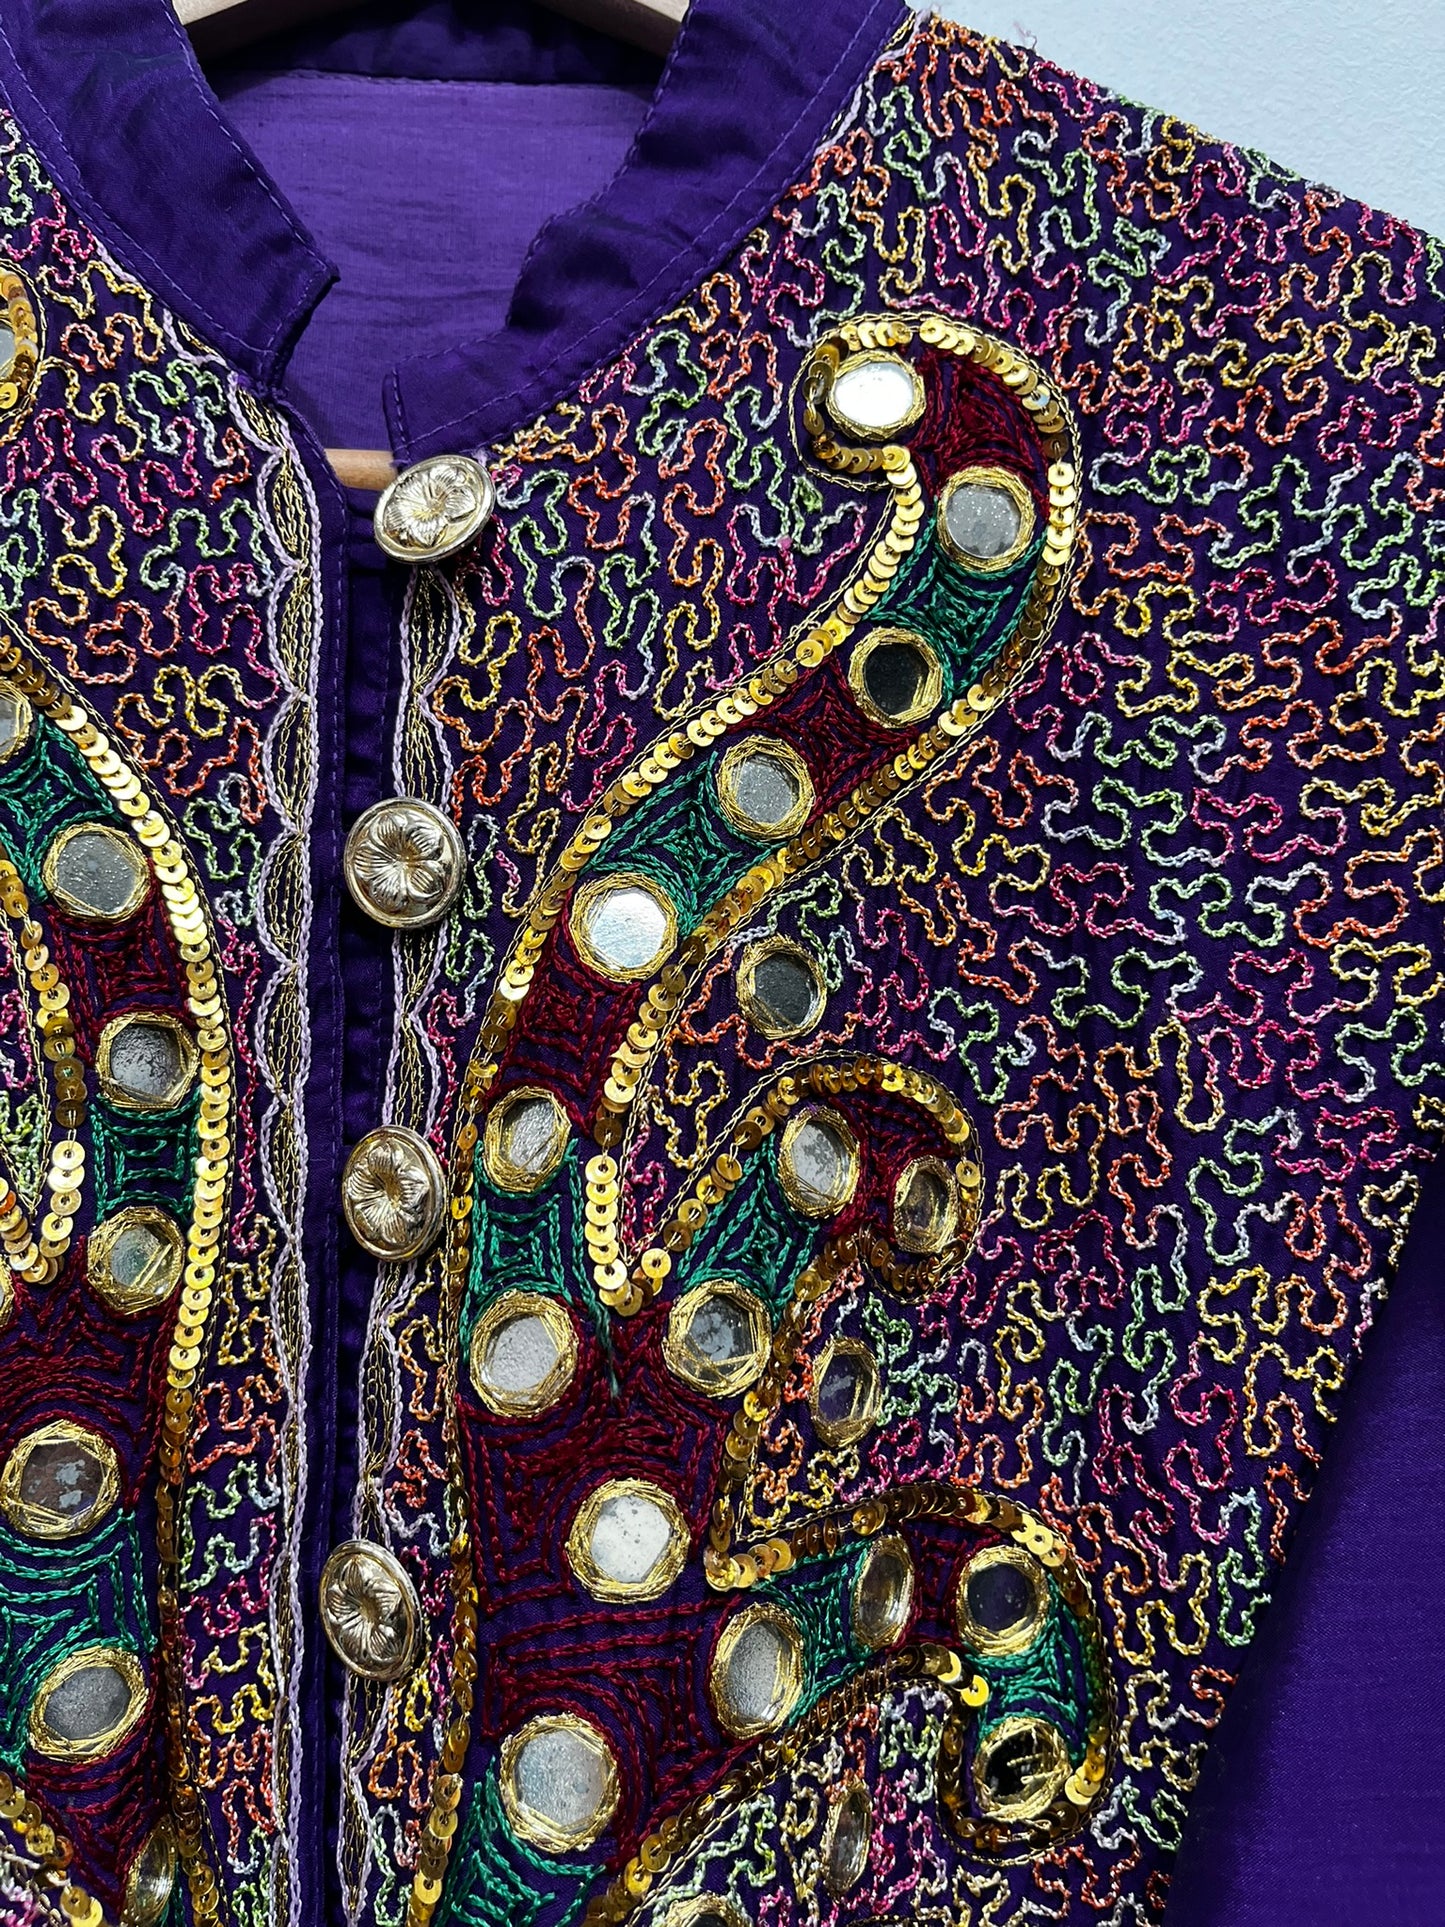 Purple Arabian style Eastern Decorative Shirt S/M - Ex Hire